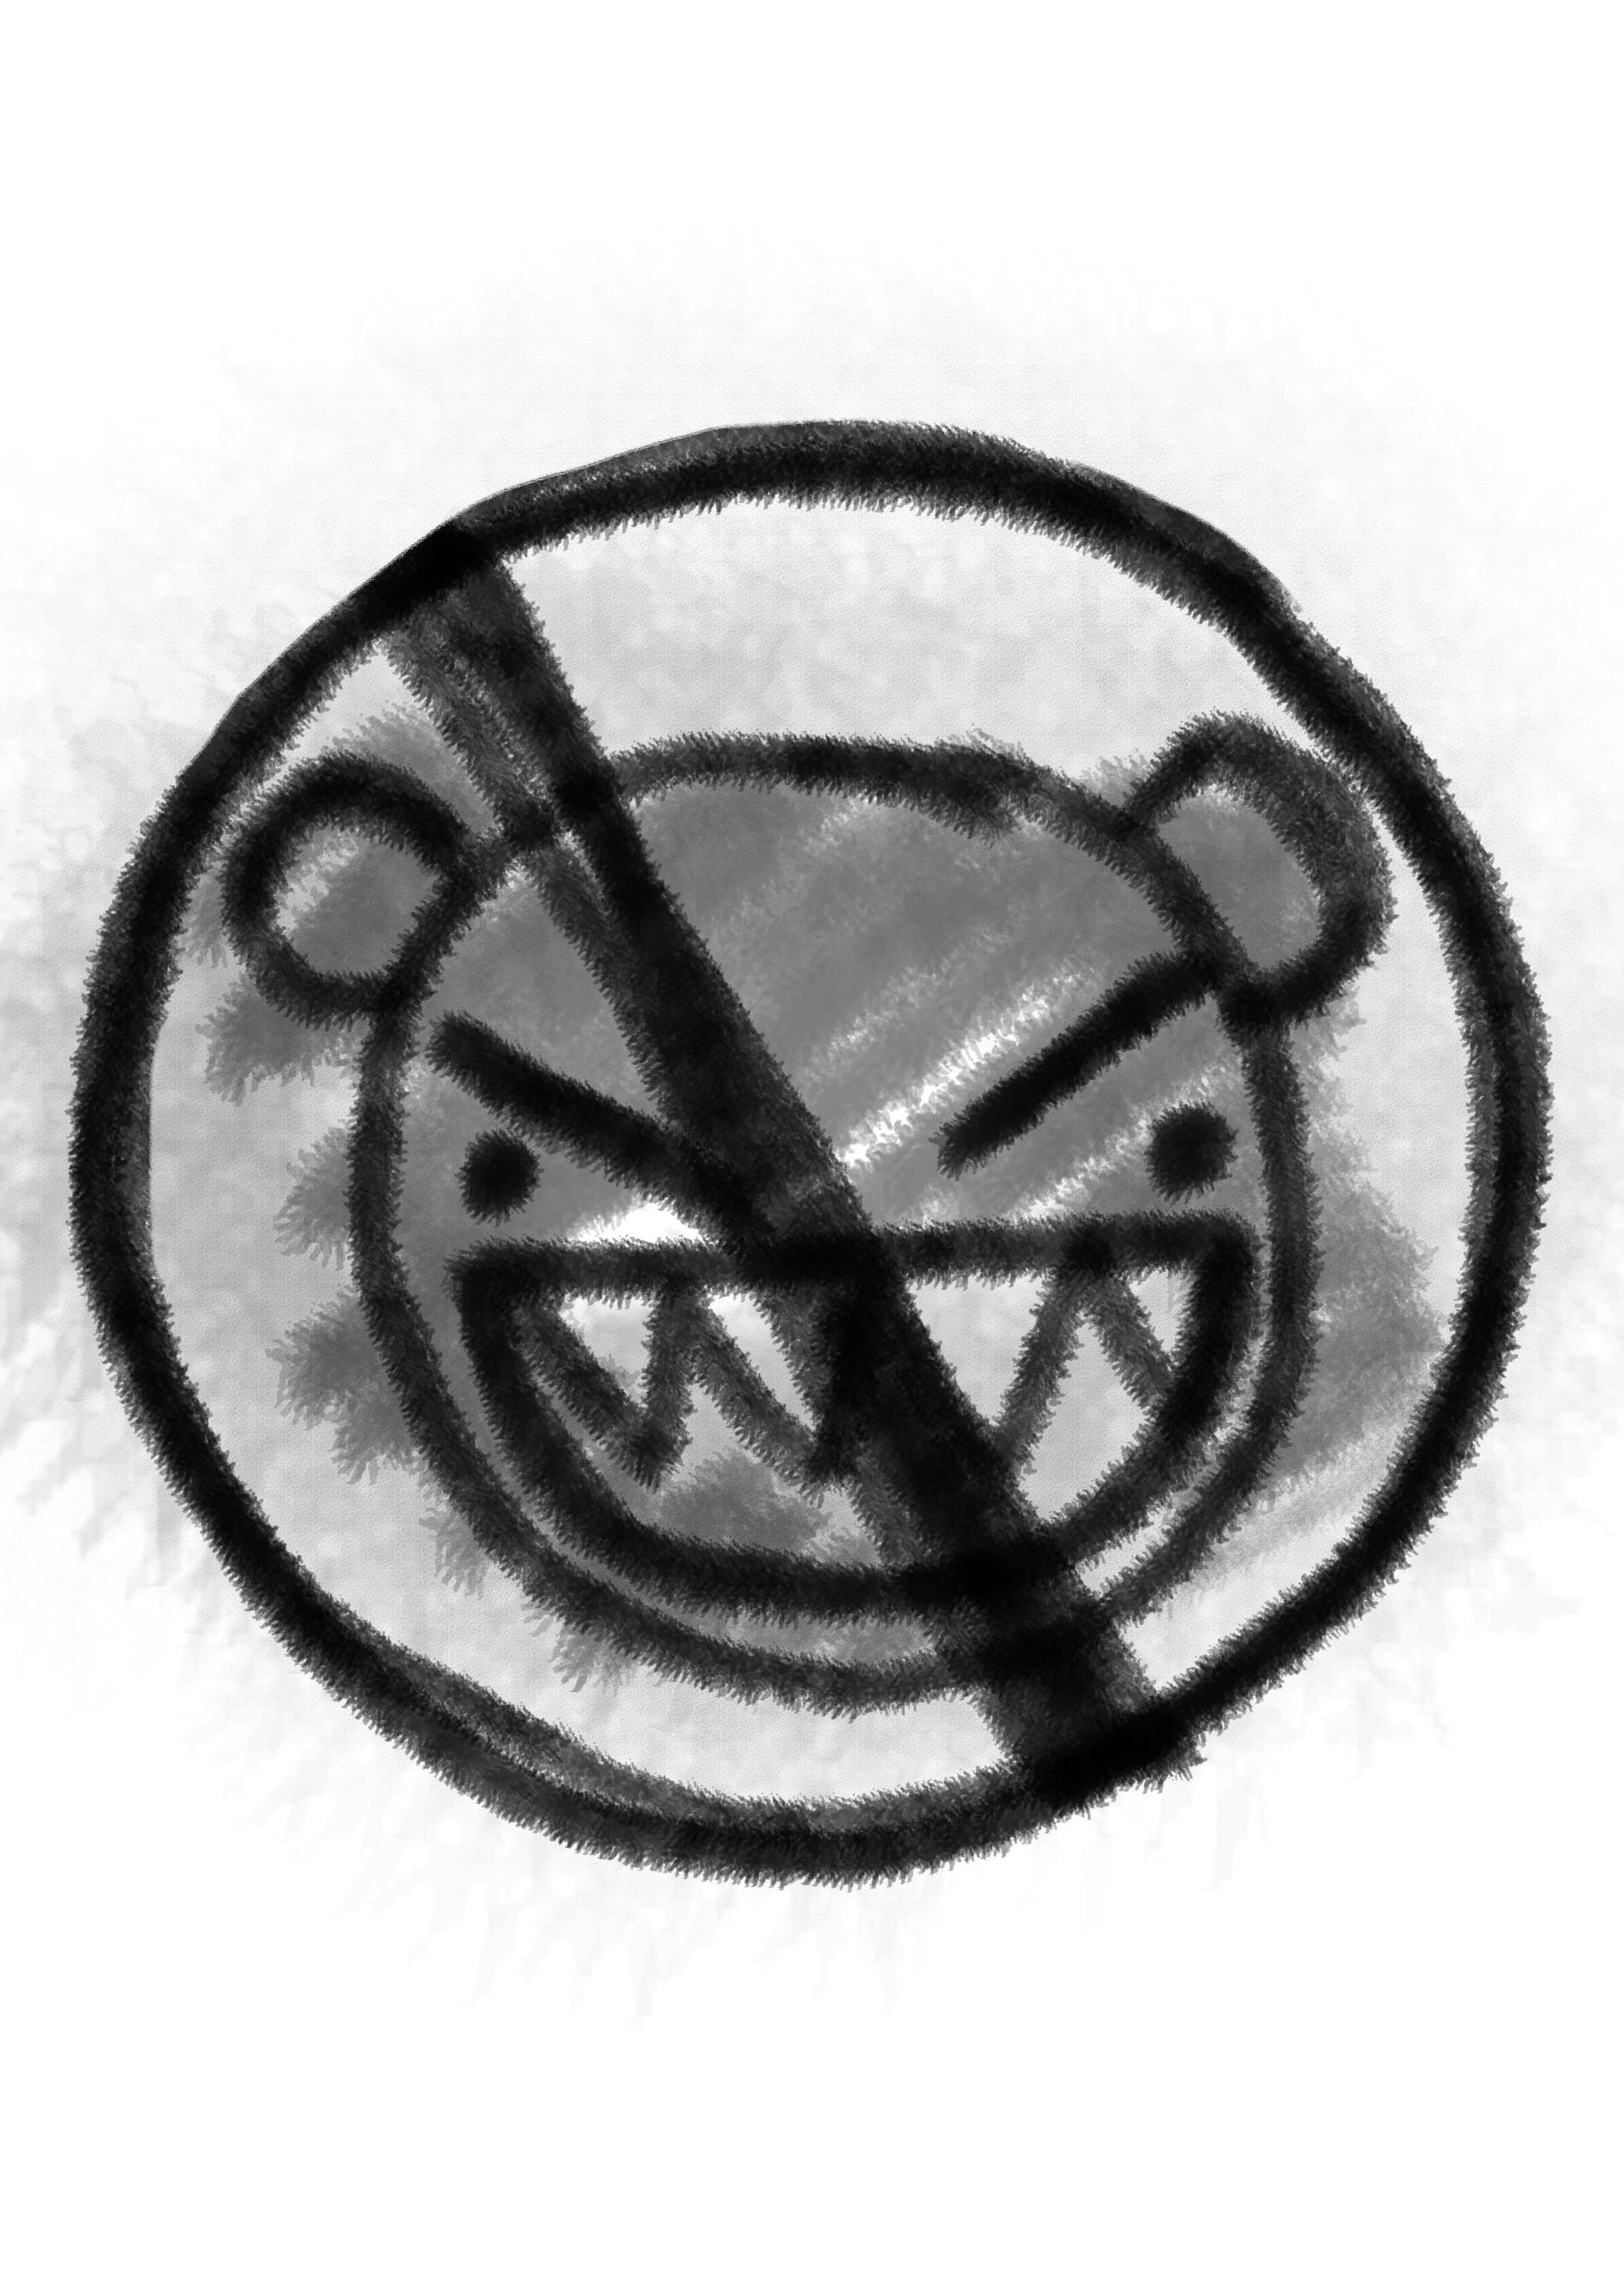 A "no bears" sign.